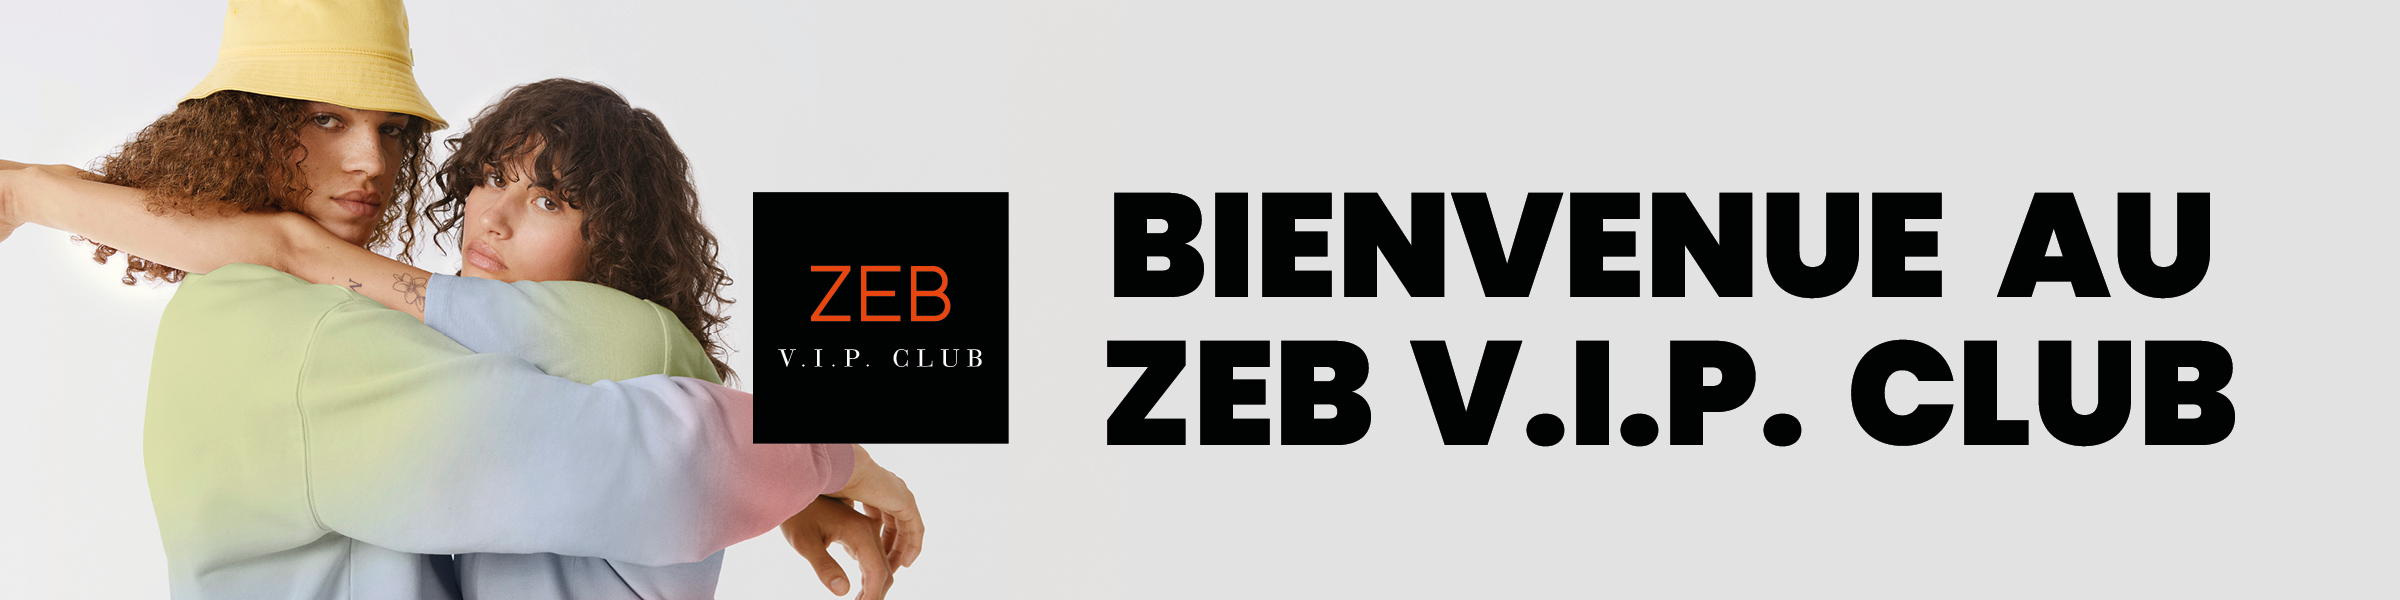 Bienvenue au ZEB V.I.P. club